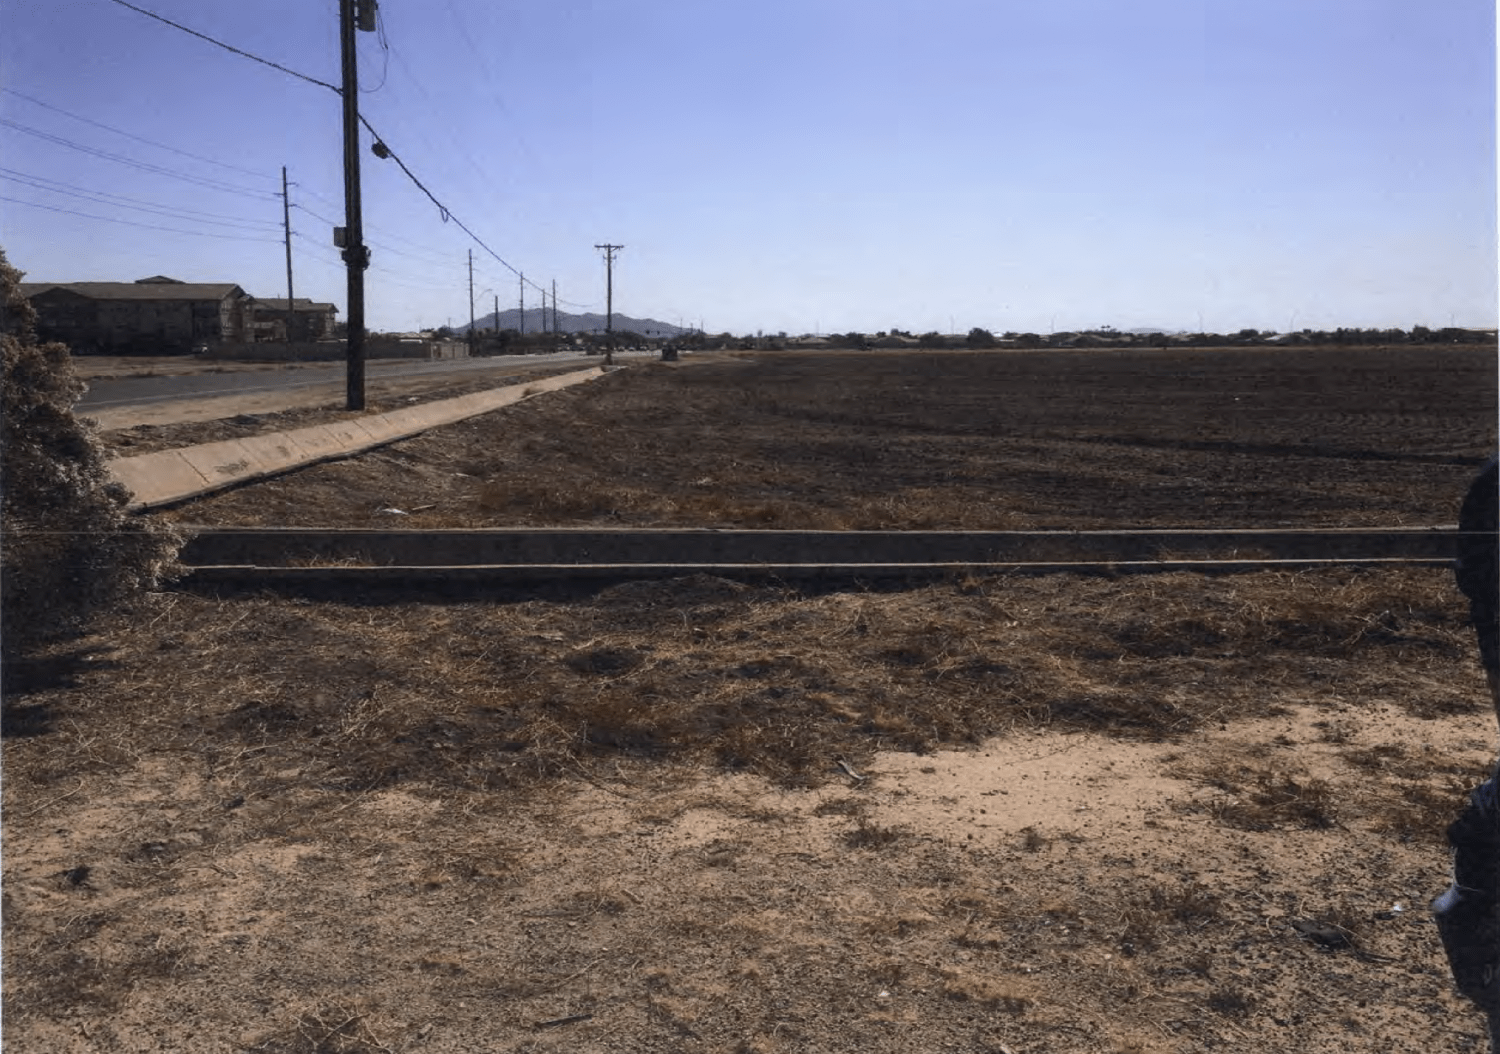 desert vista with train tracks in arizona